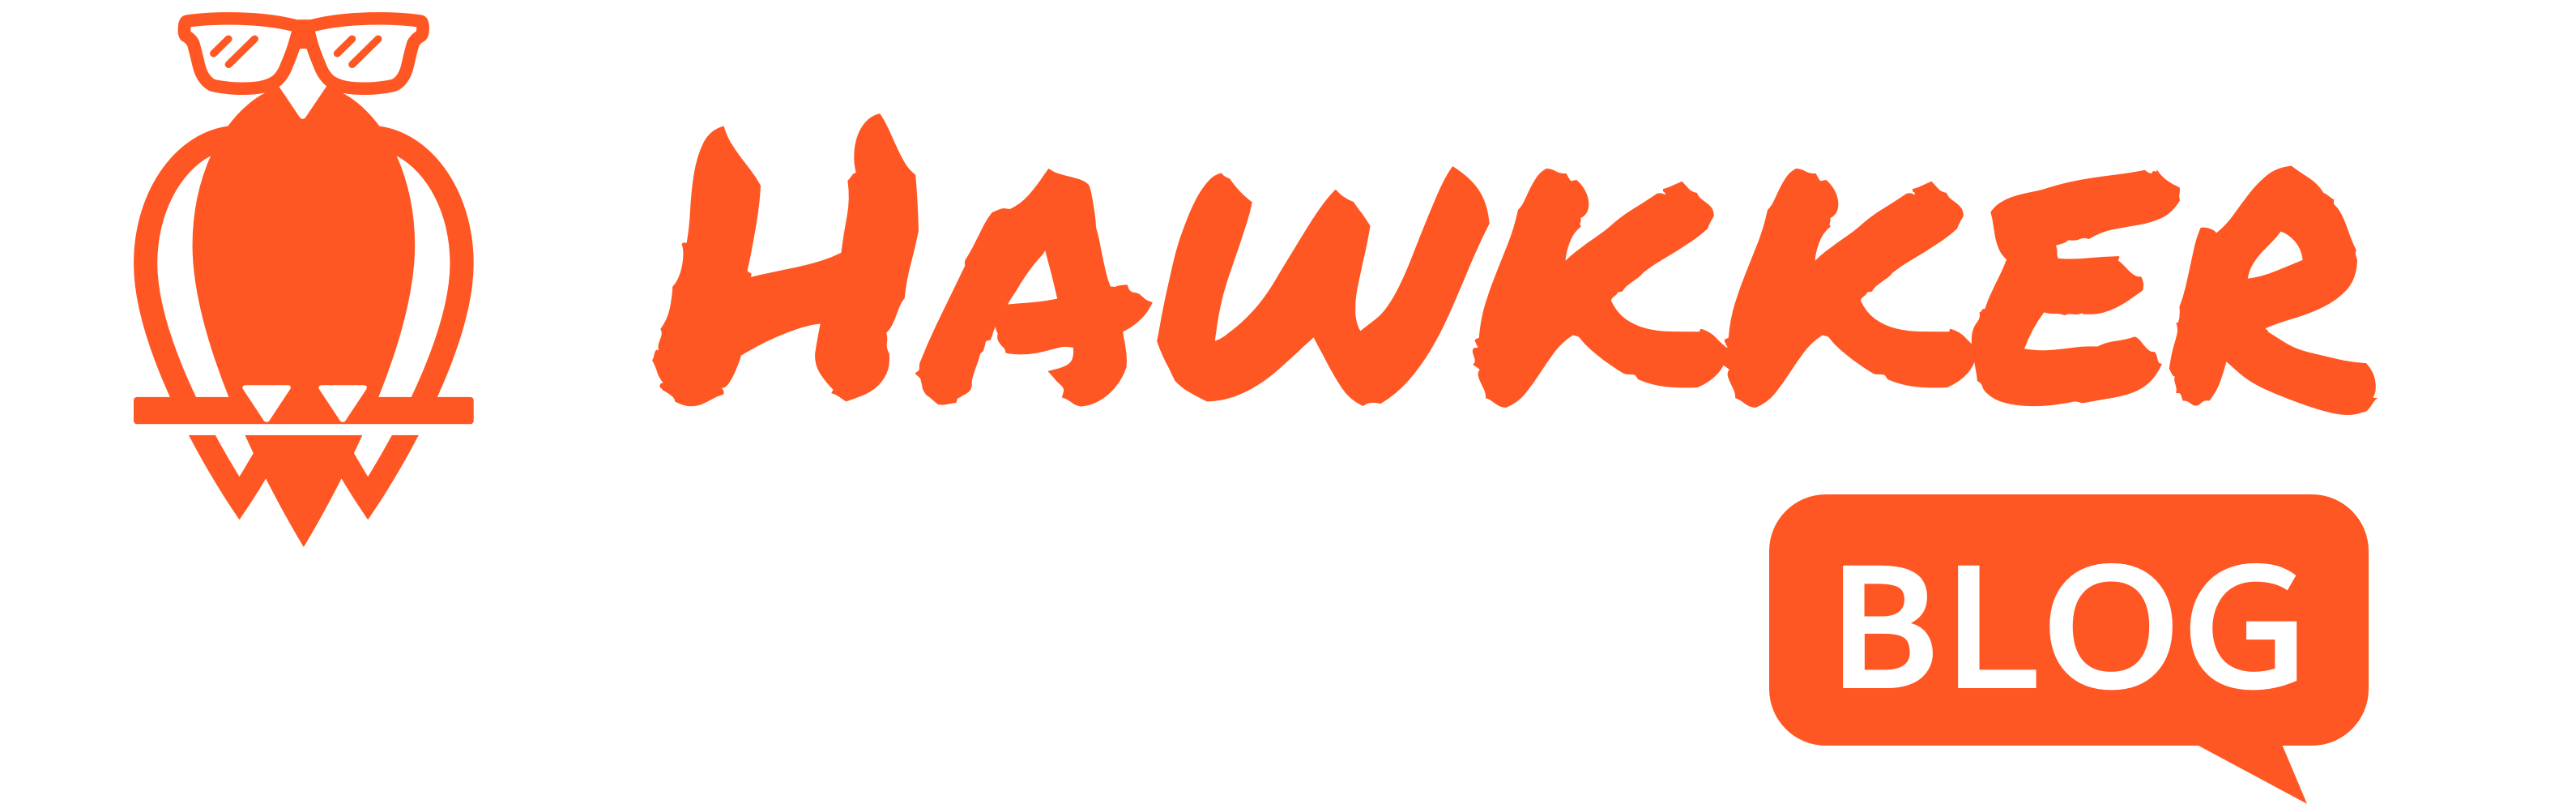 The Hawkker Blog